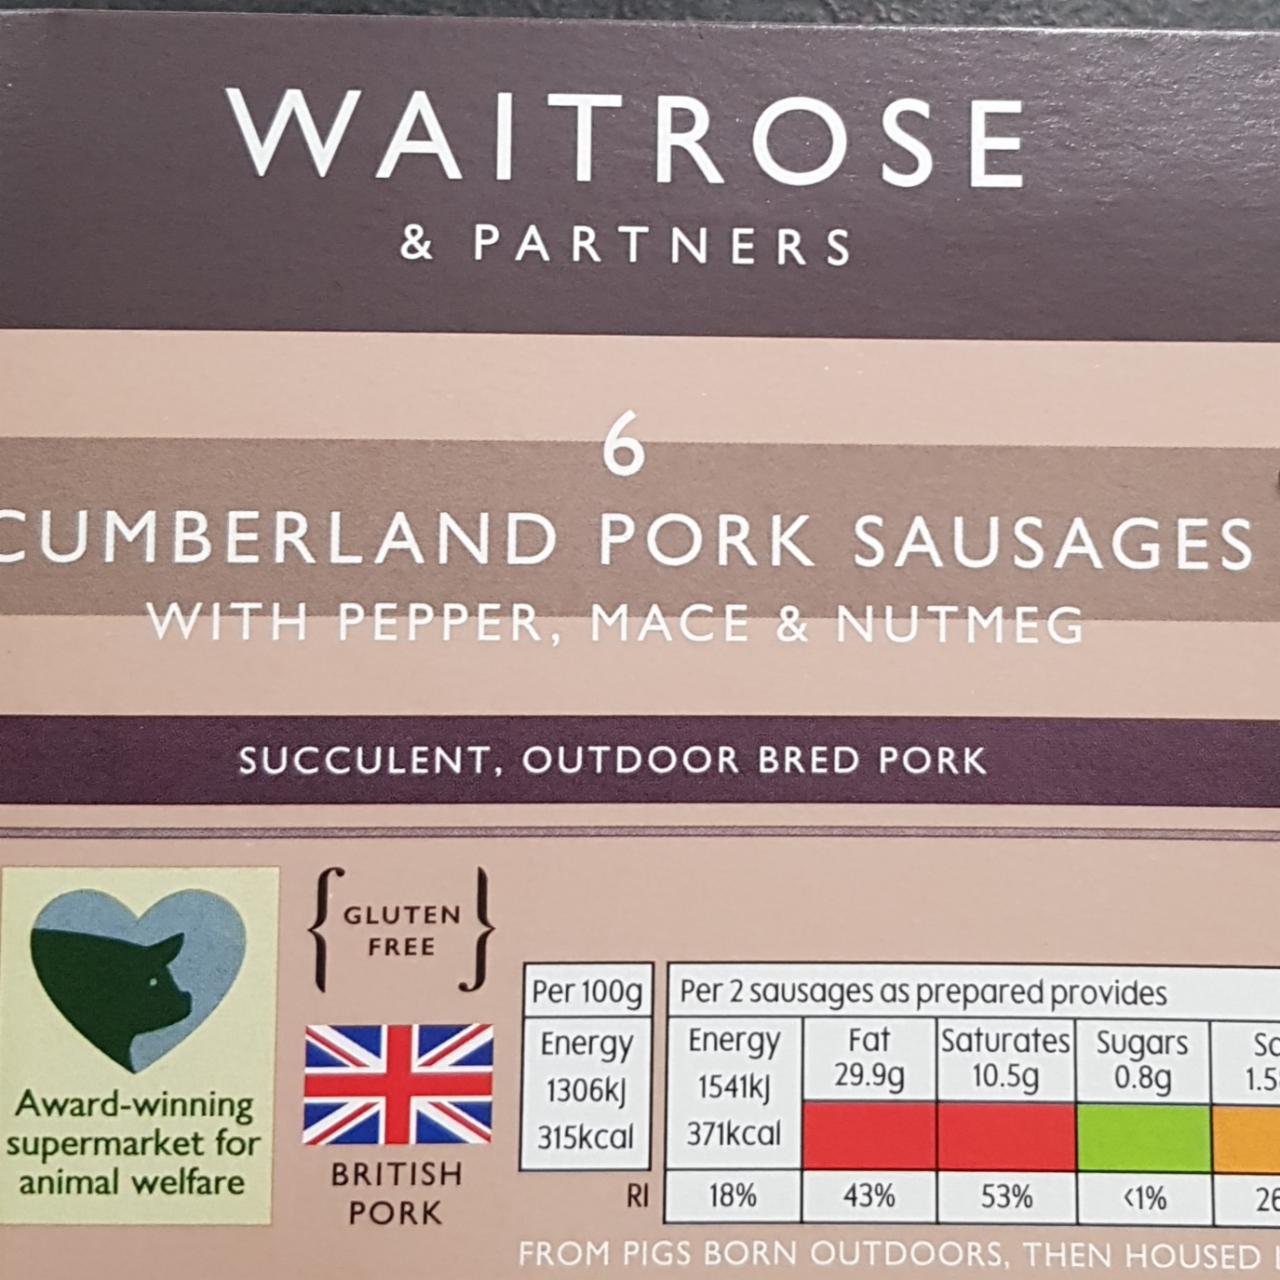 Fotografie - 6 Cumberland pork sausages with pepper, mace & nutmeg Waitrose & Partners